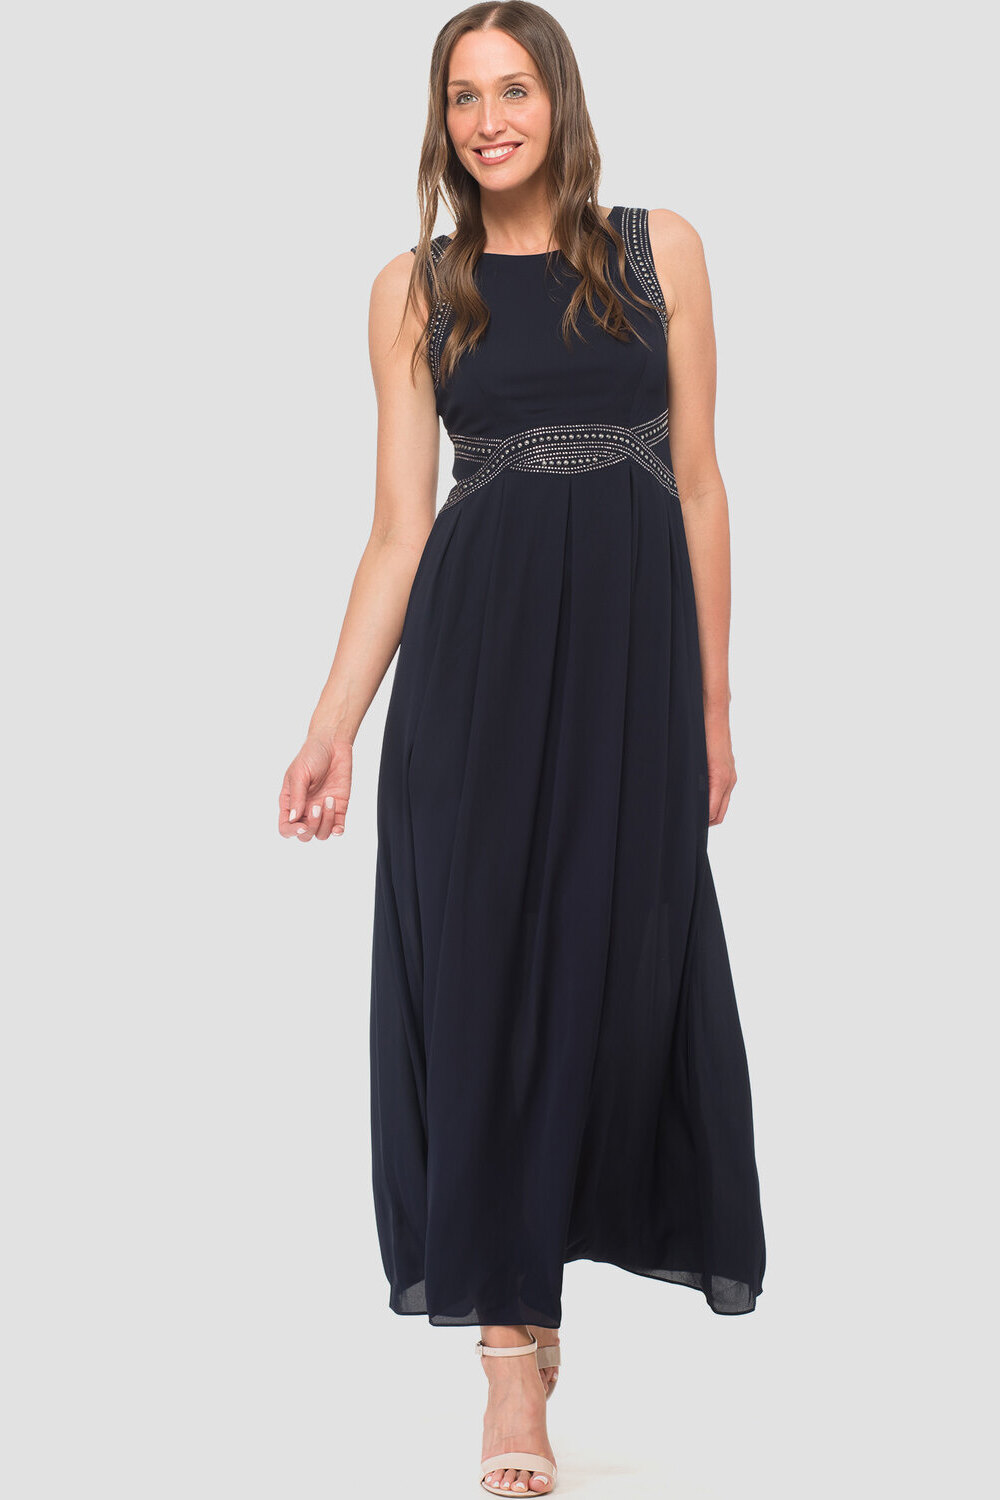 Joseph Ribkoff dress style 183251. Midnight Blue 40